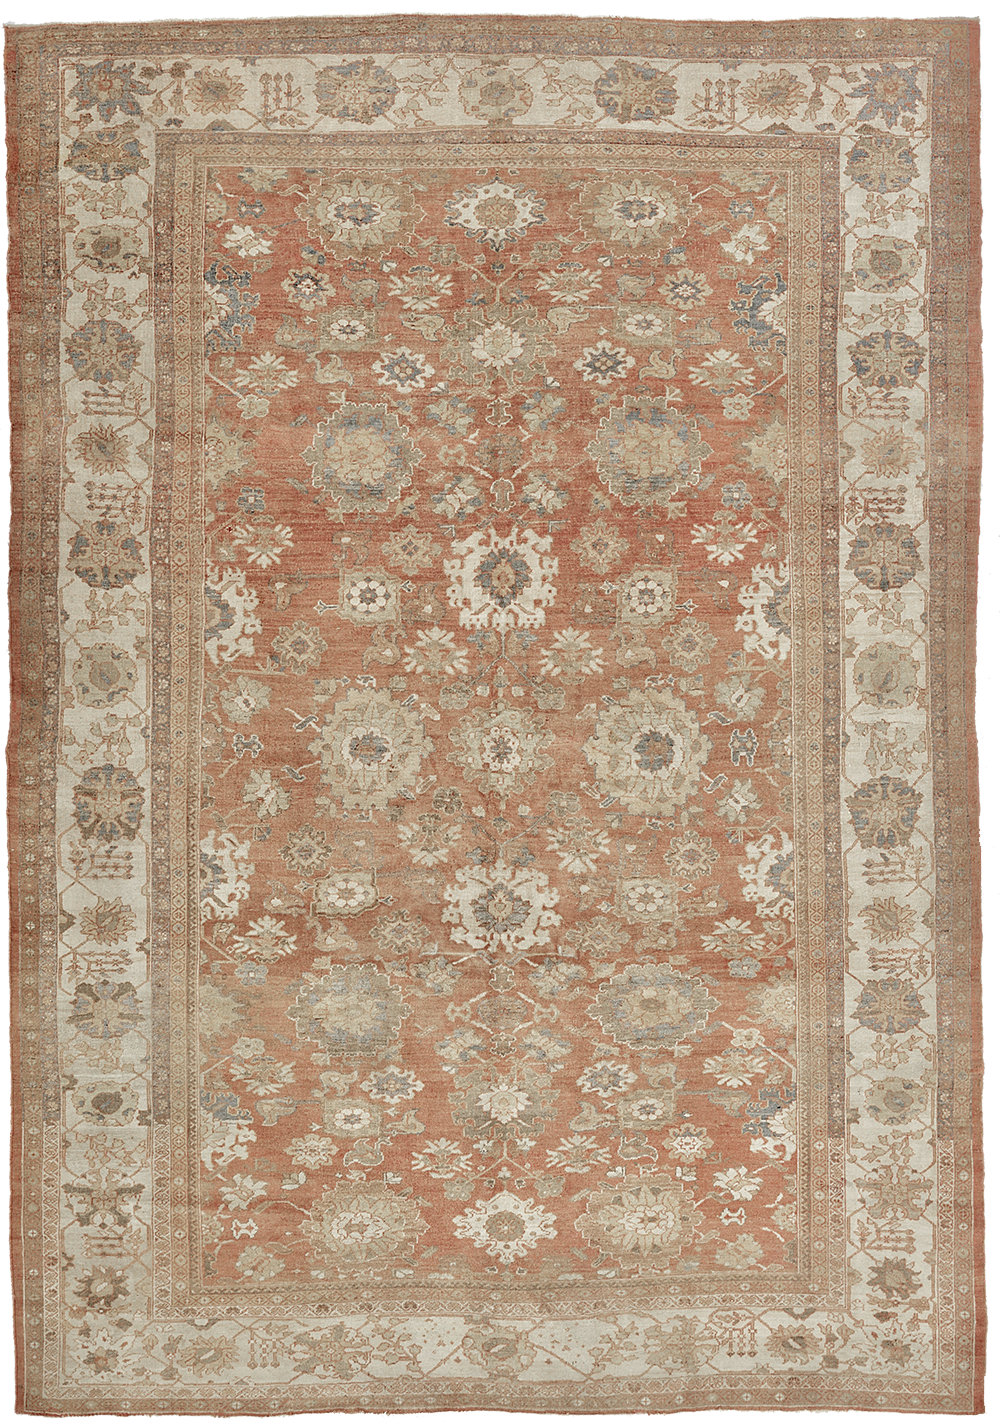 Fine Ziegler carpet